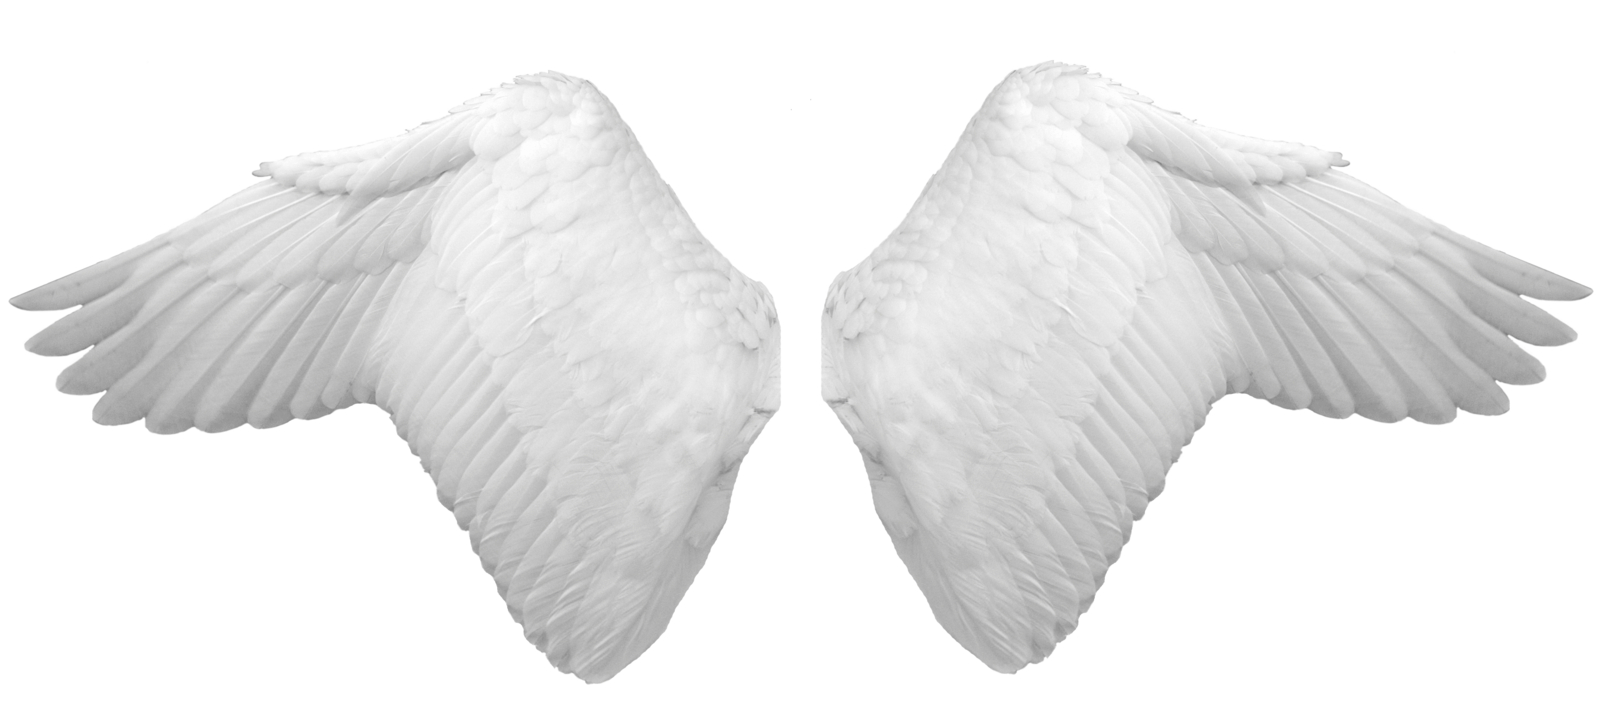 Flügel